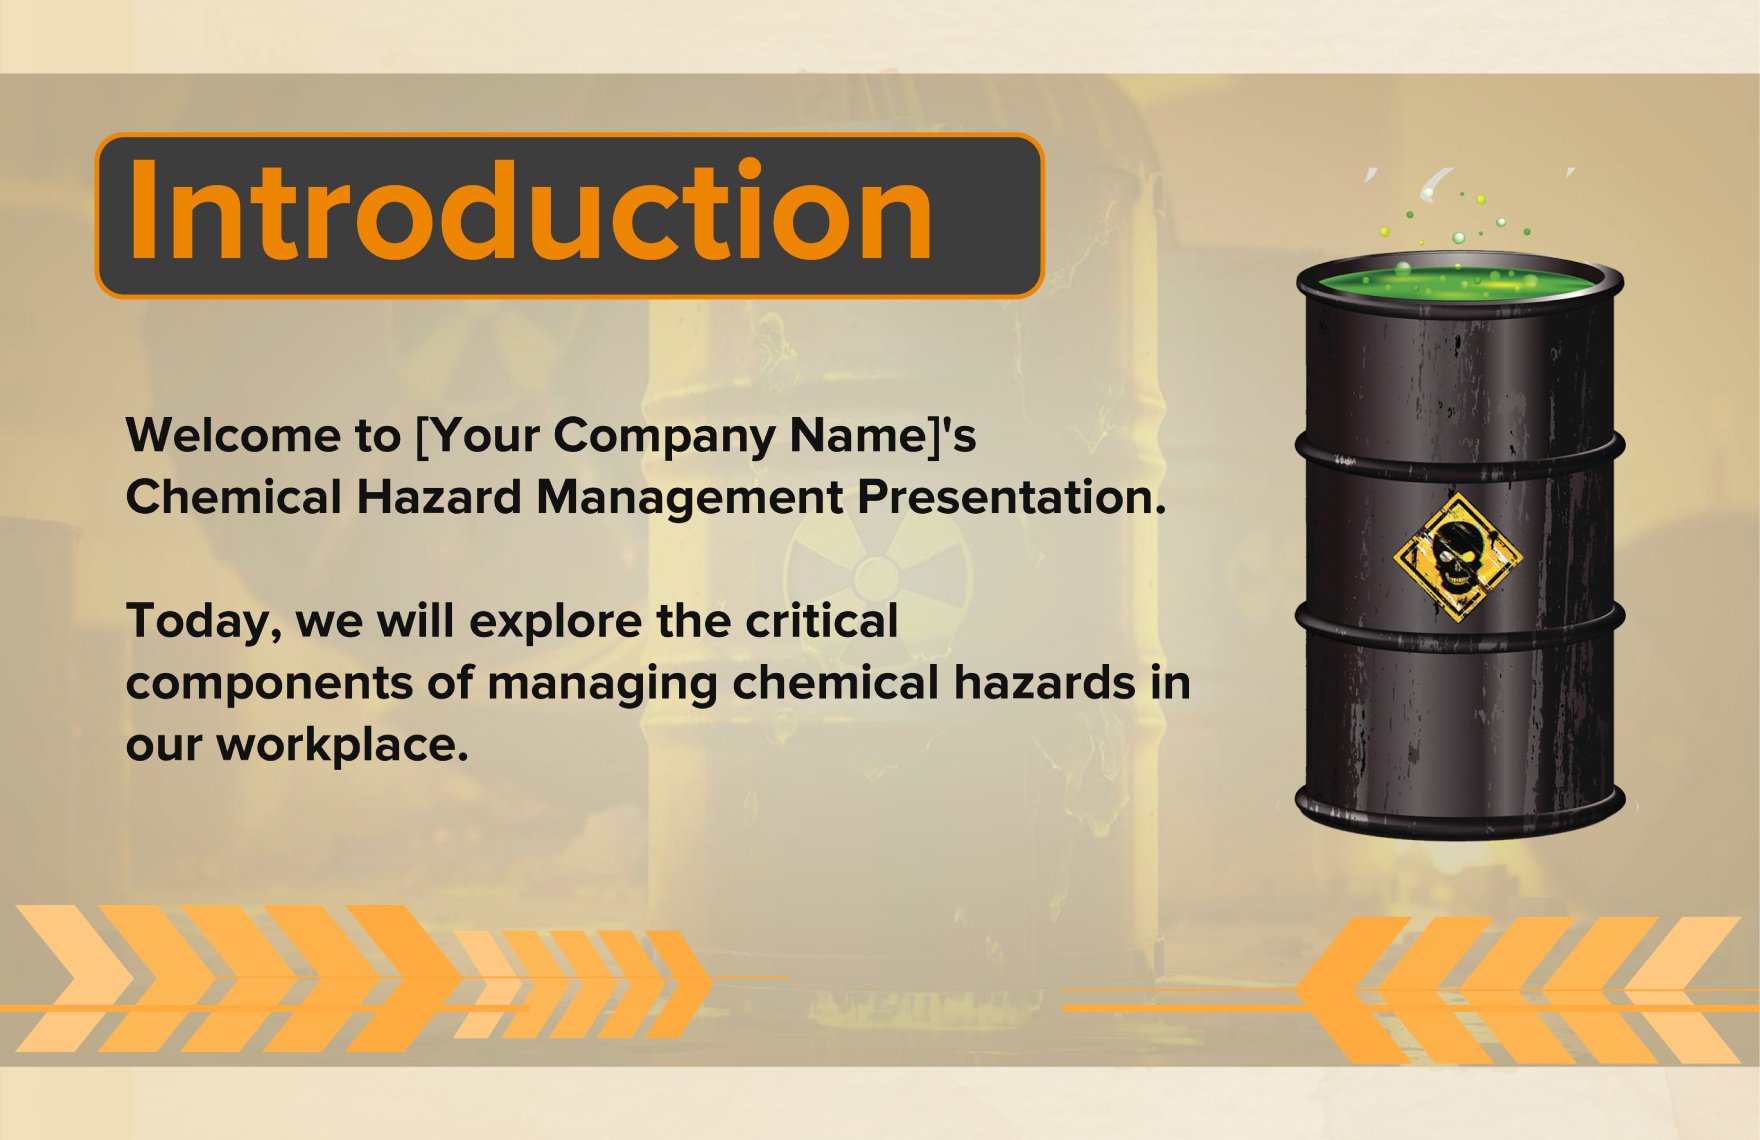 Chemical Hazard Management Presentation Template